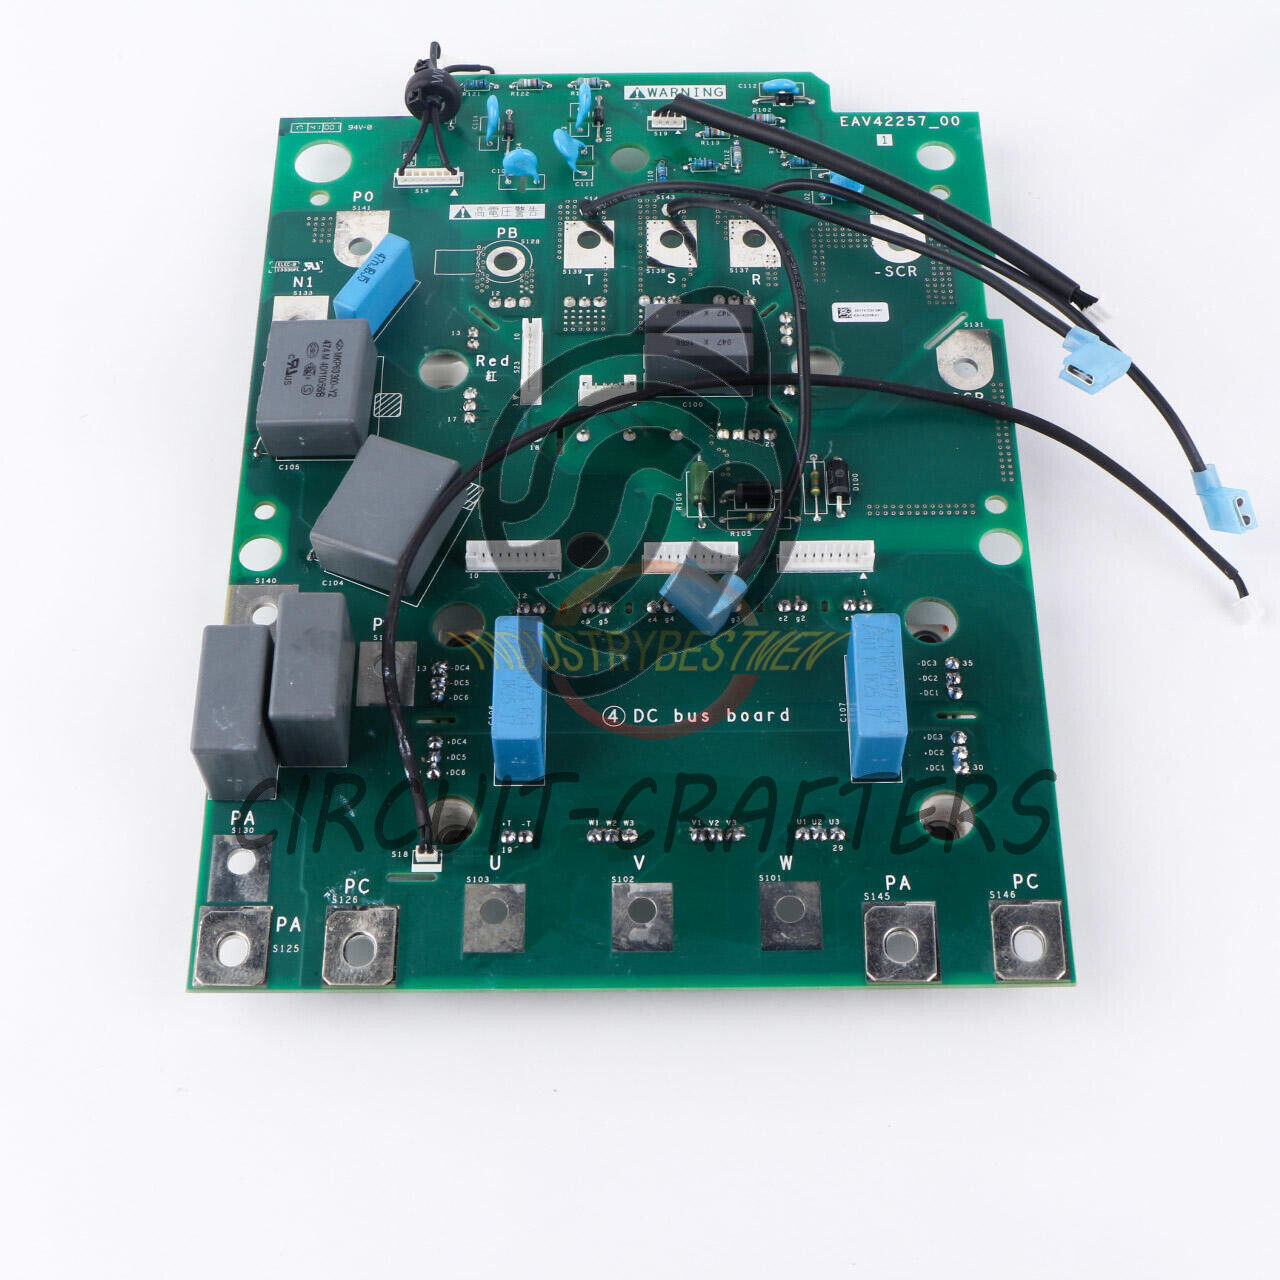 1PCS USED EAV42257-00 drive power board with module